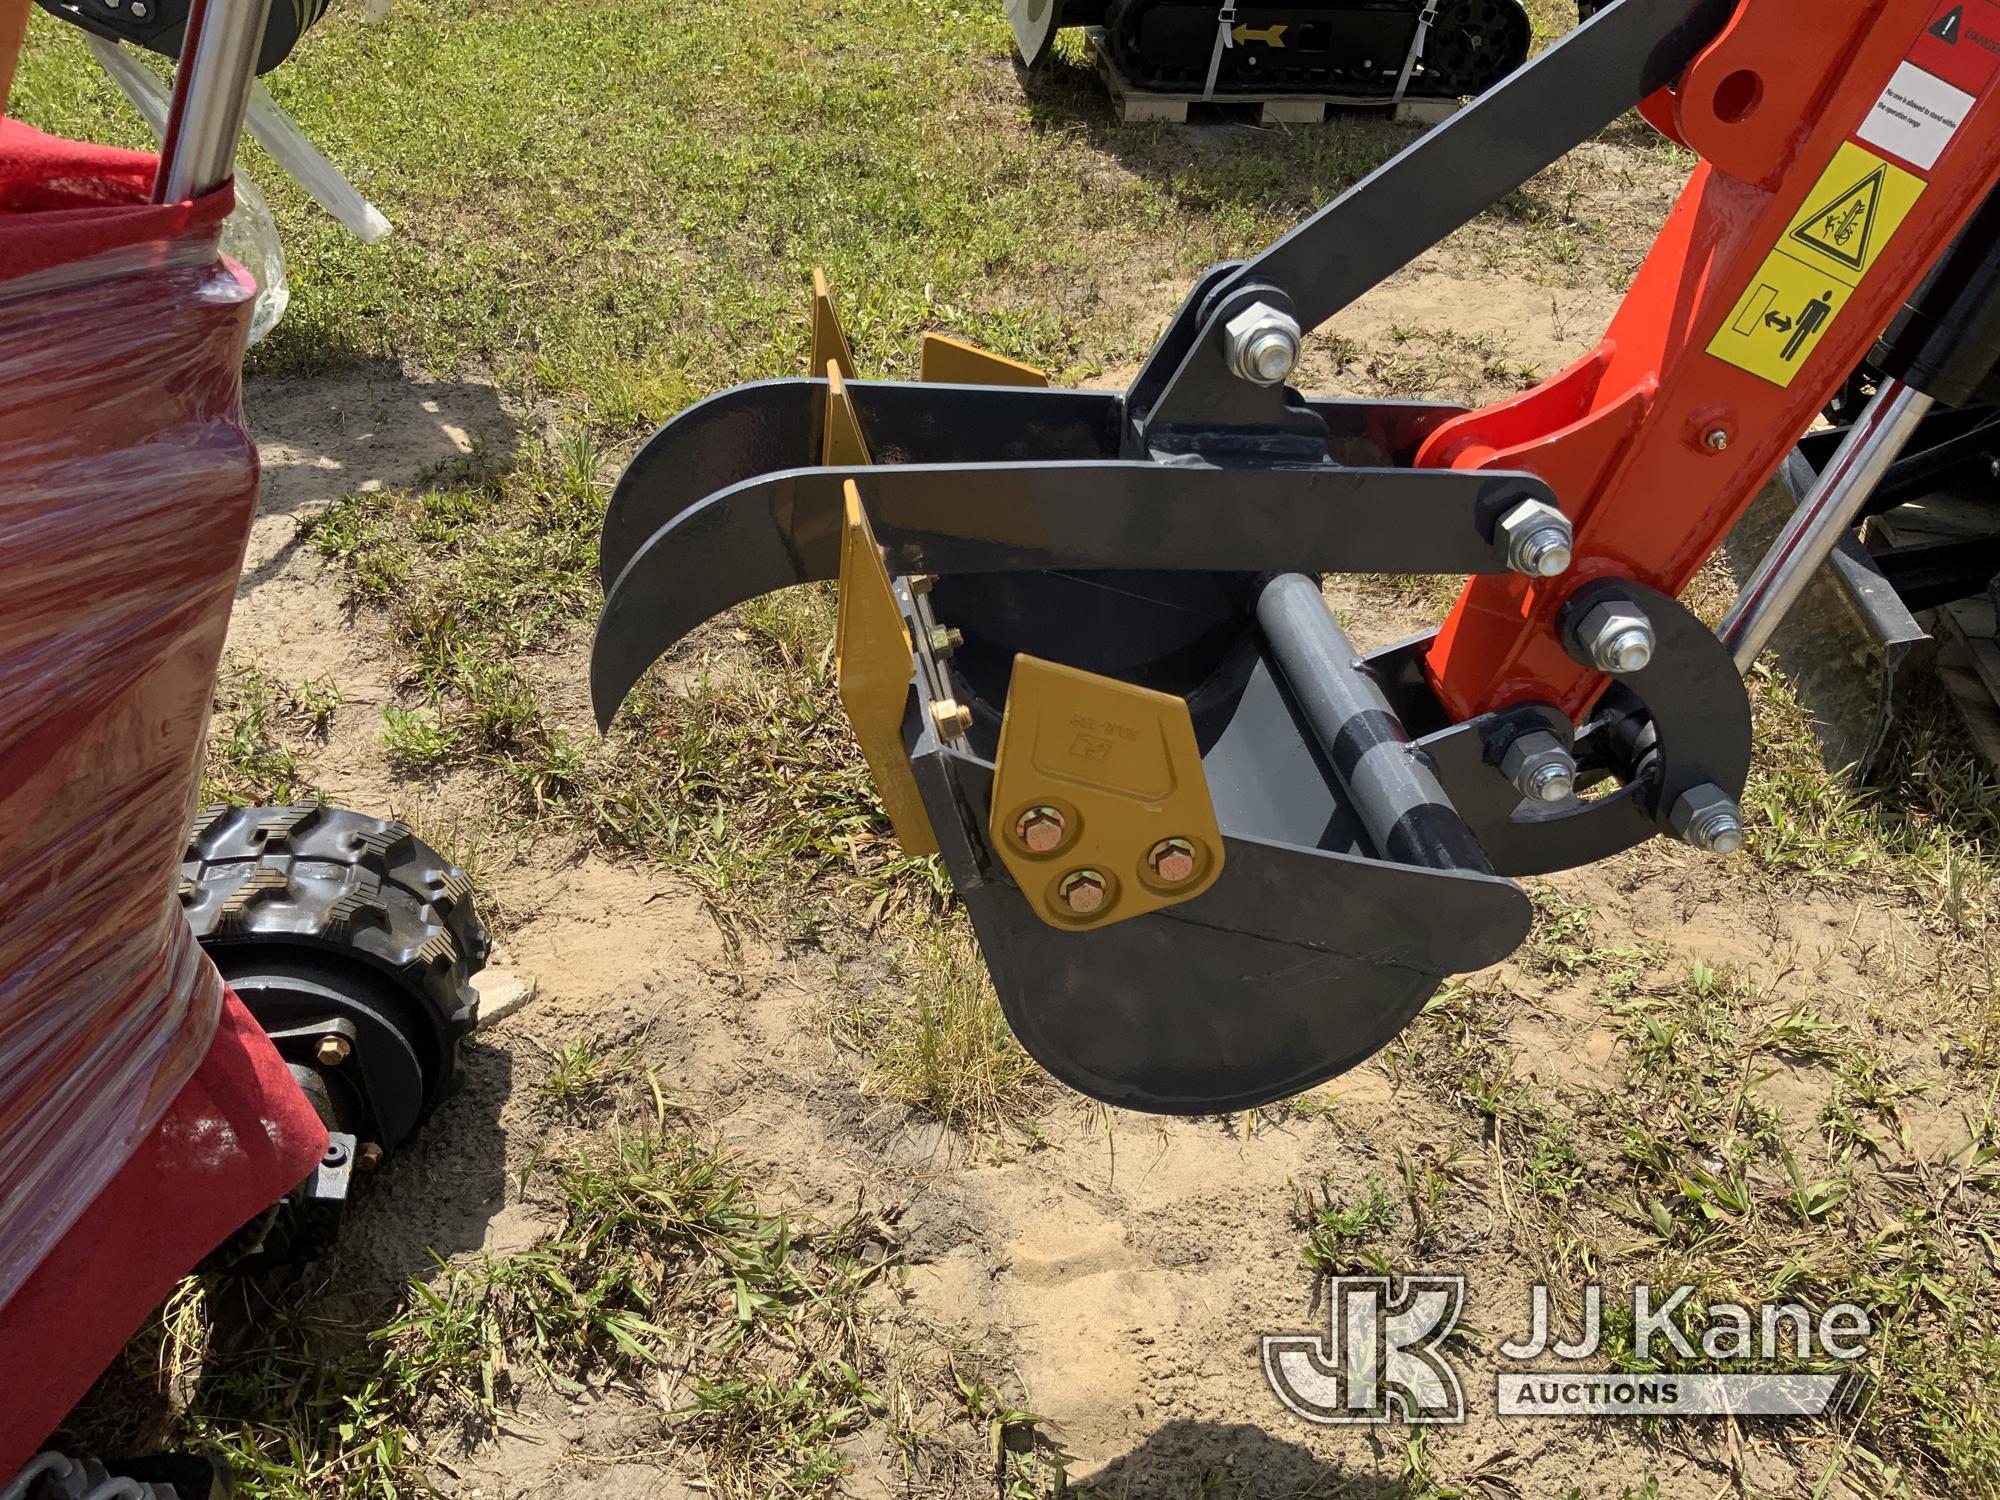 (Westlake, FL) 2024 AGT H15 Mini Hydraulic Excavator New/Unused